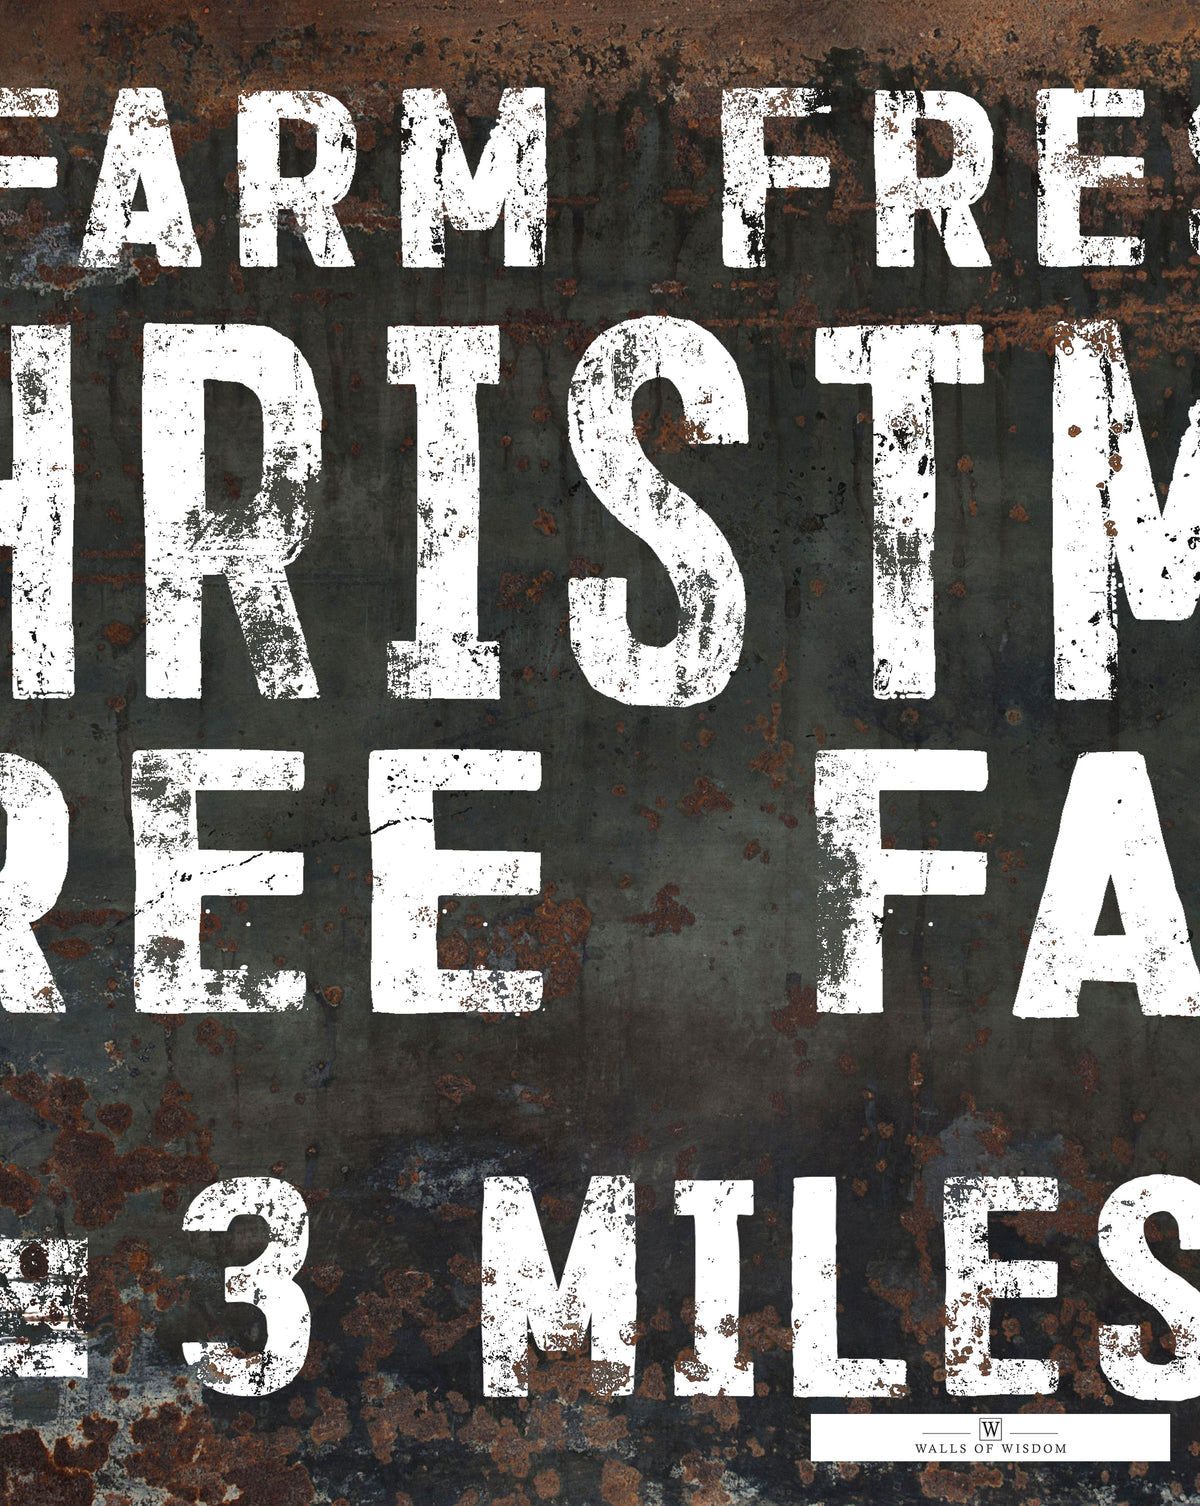 Farm Fresh Christmas Trees Farmhouse Canvas Wall Art -  Vintage Holiday Signs